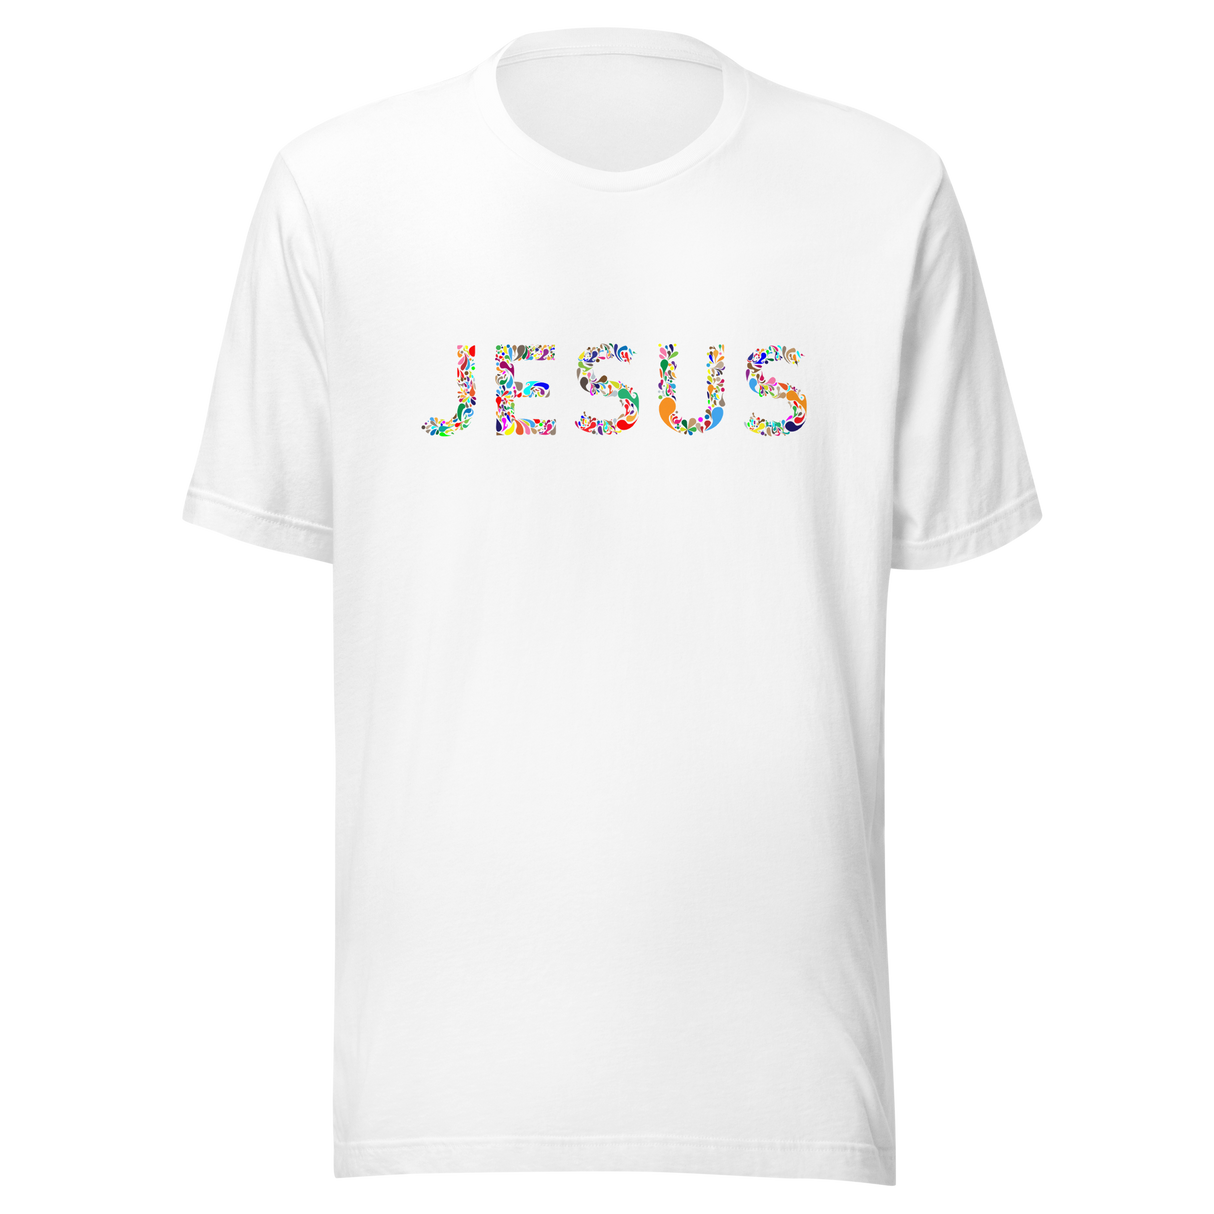 Jesus - Christian Tee - Jesus T-Shirt - God Tee - Faith T-Shirt - Religion Tee